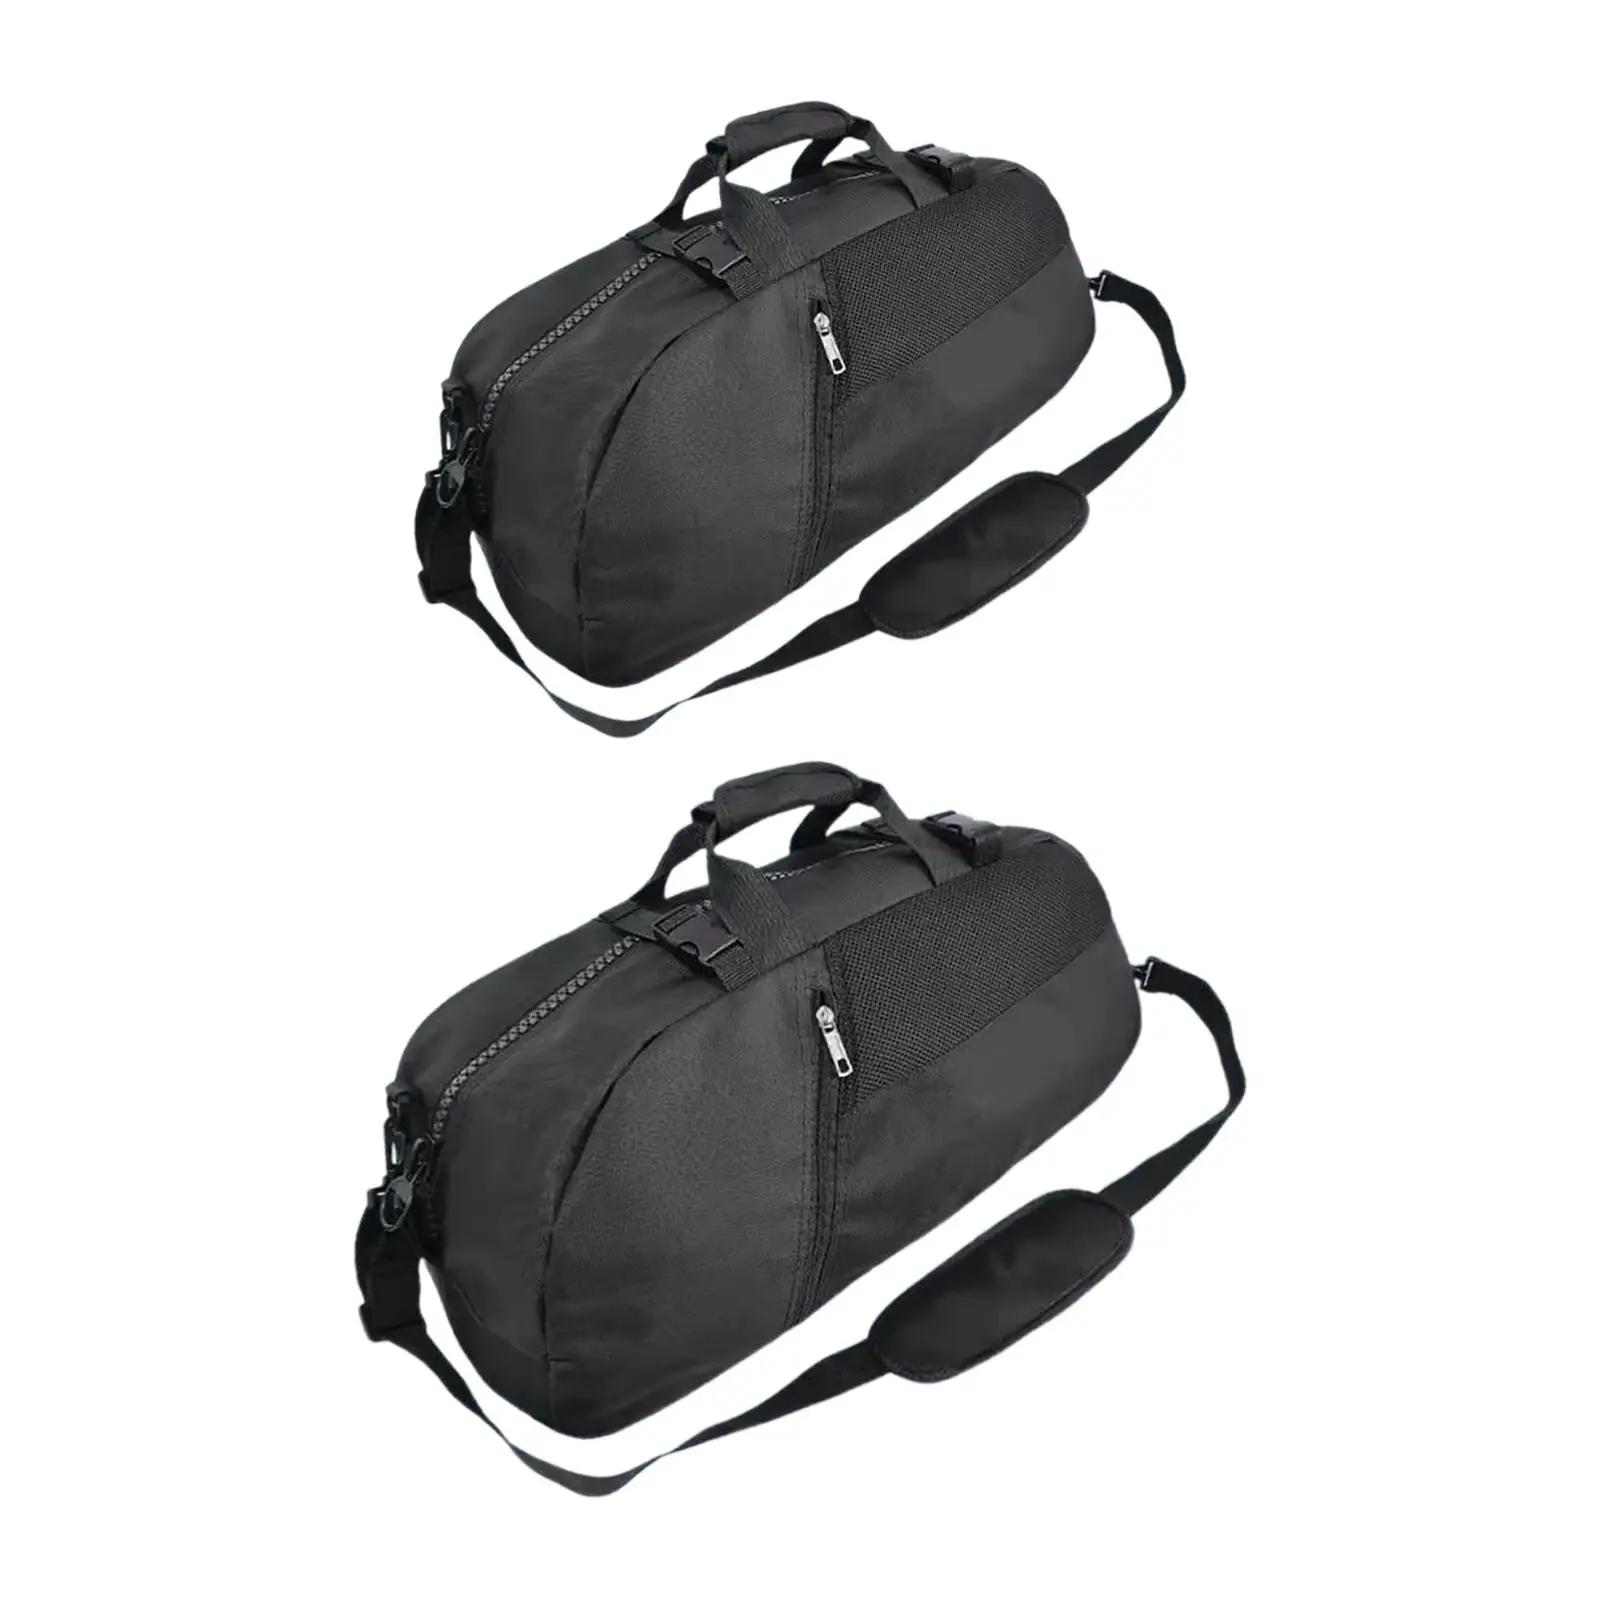 

Karate Taekwondo Sparring Gear Bag Sports Bag Multifunctional Overnight Weekender Bag for Workout Travel Swimming Weekend Beach